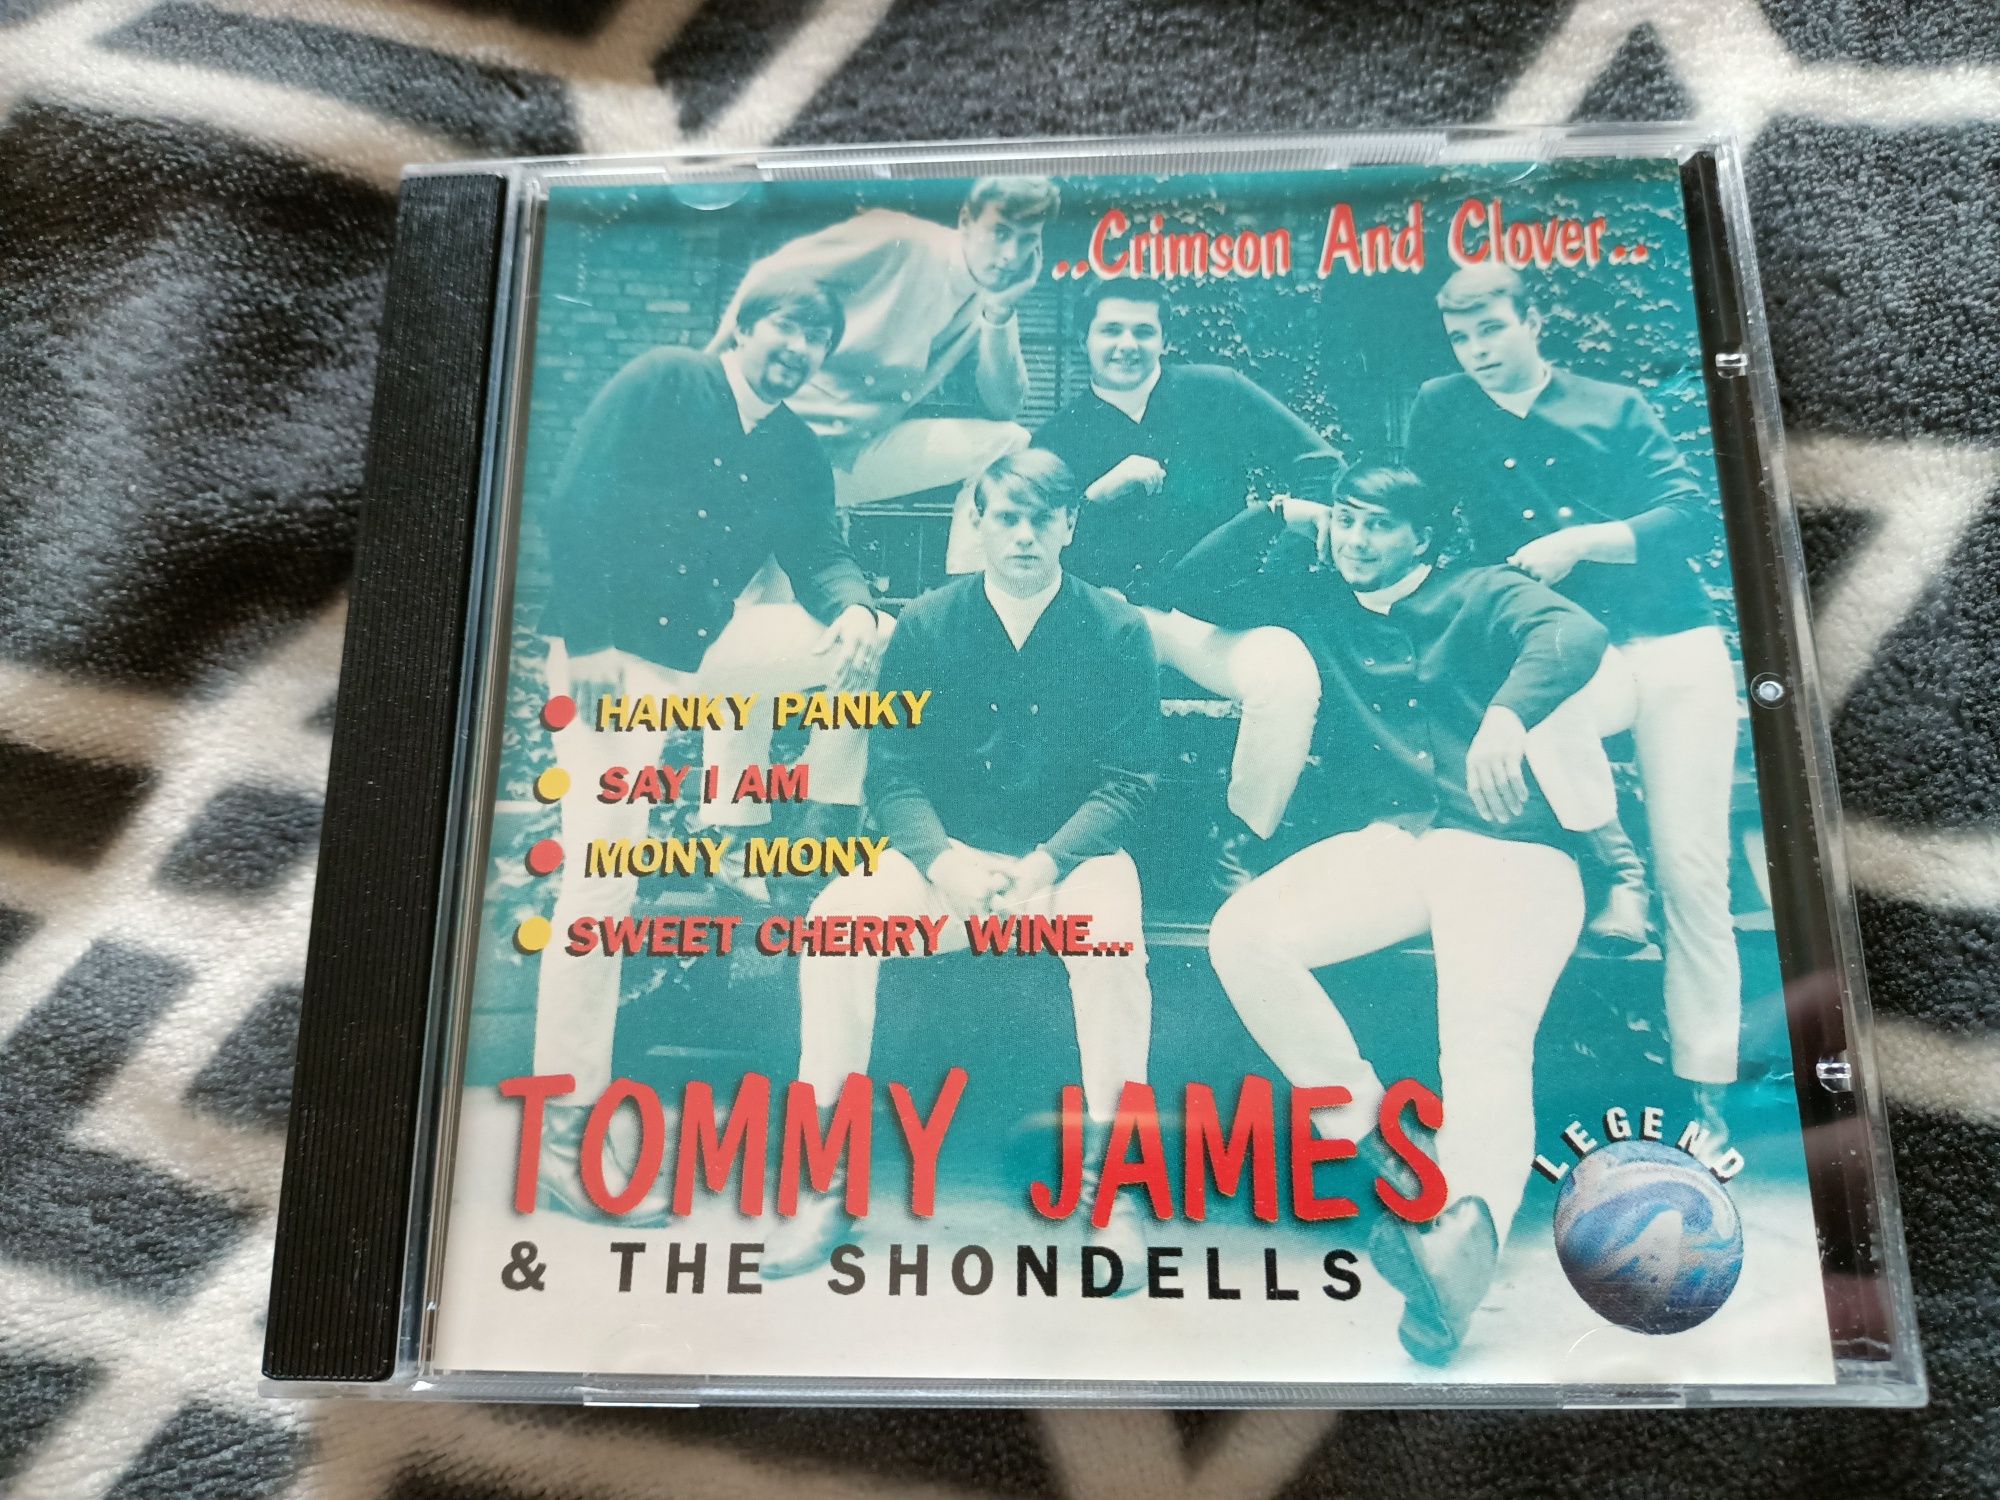 Tommy James & The Shondells - "Crimson And Clover" (CD, Comp)(vg+)